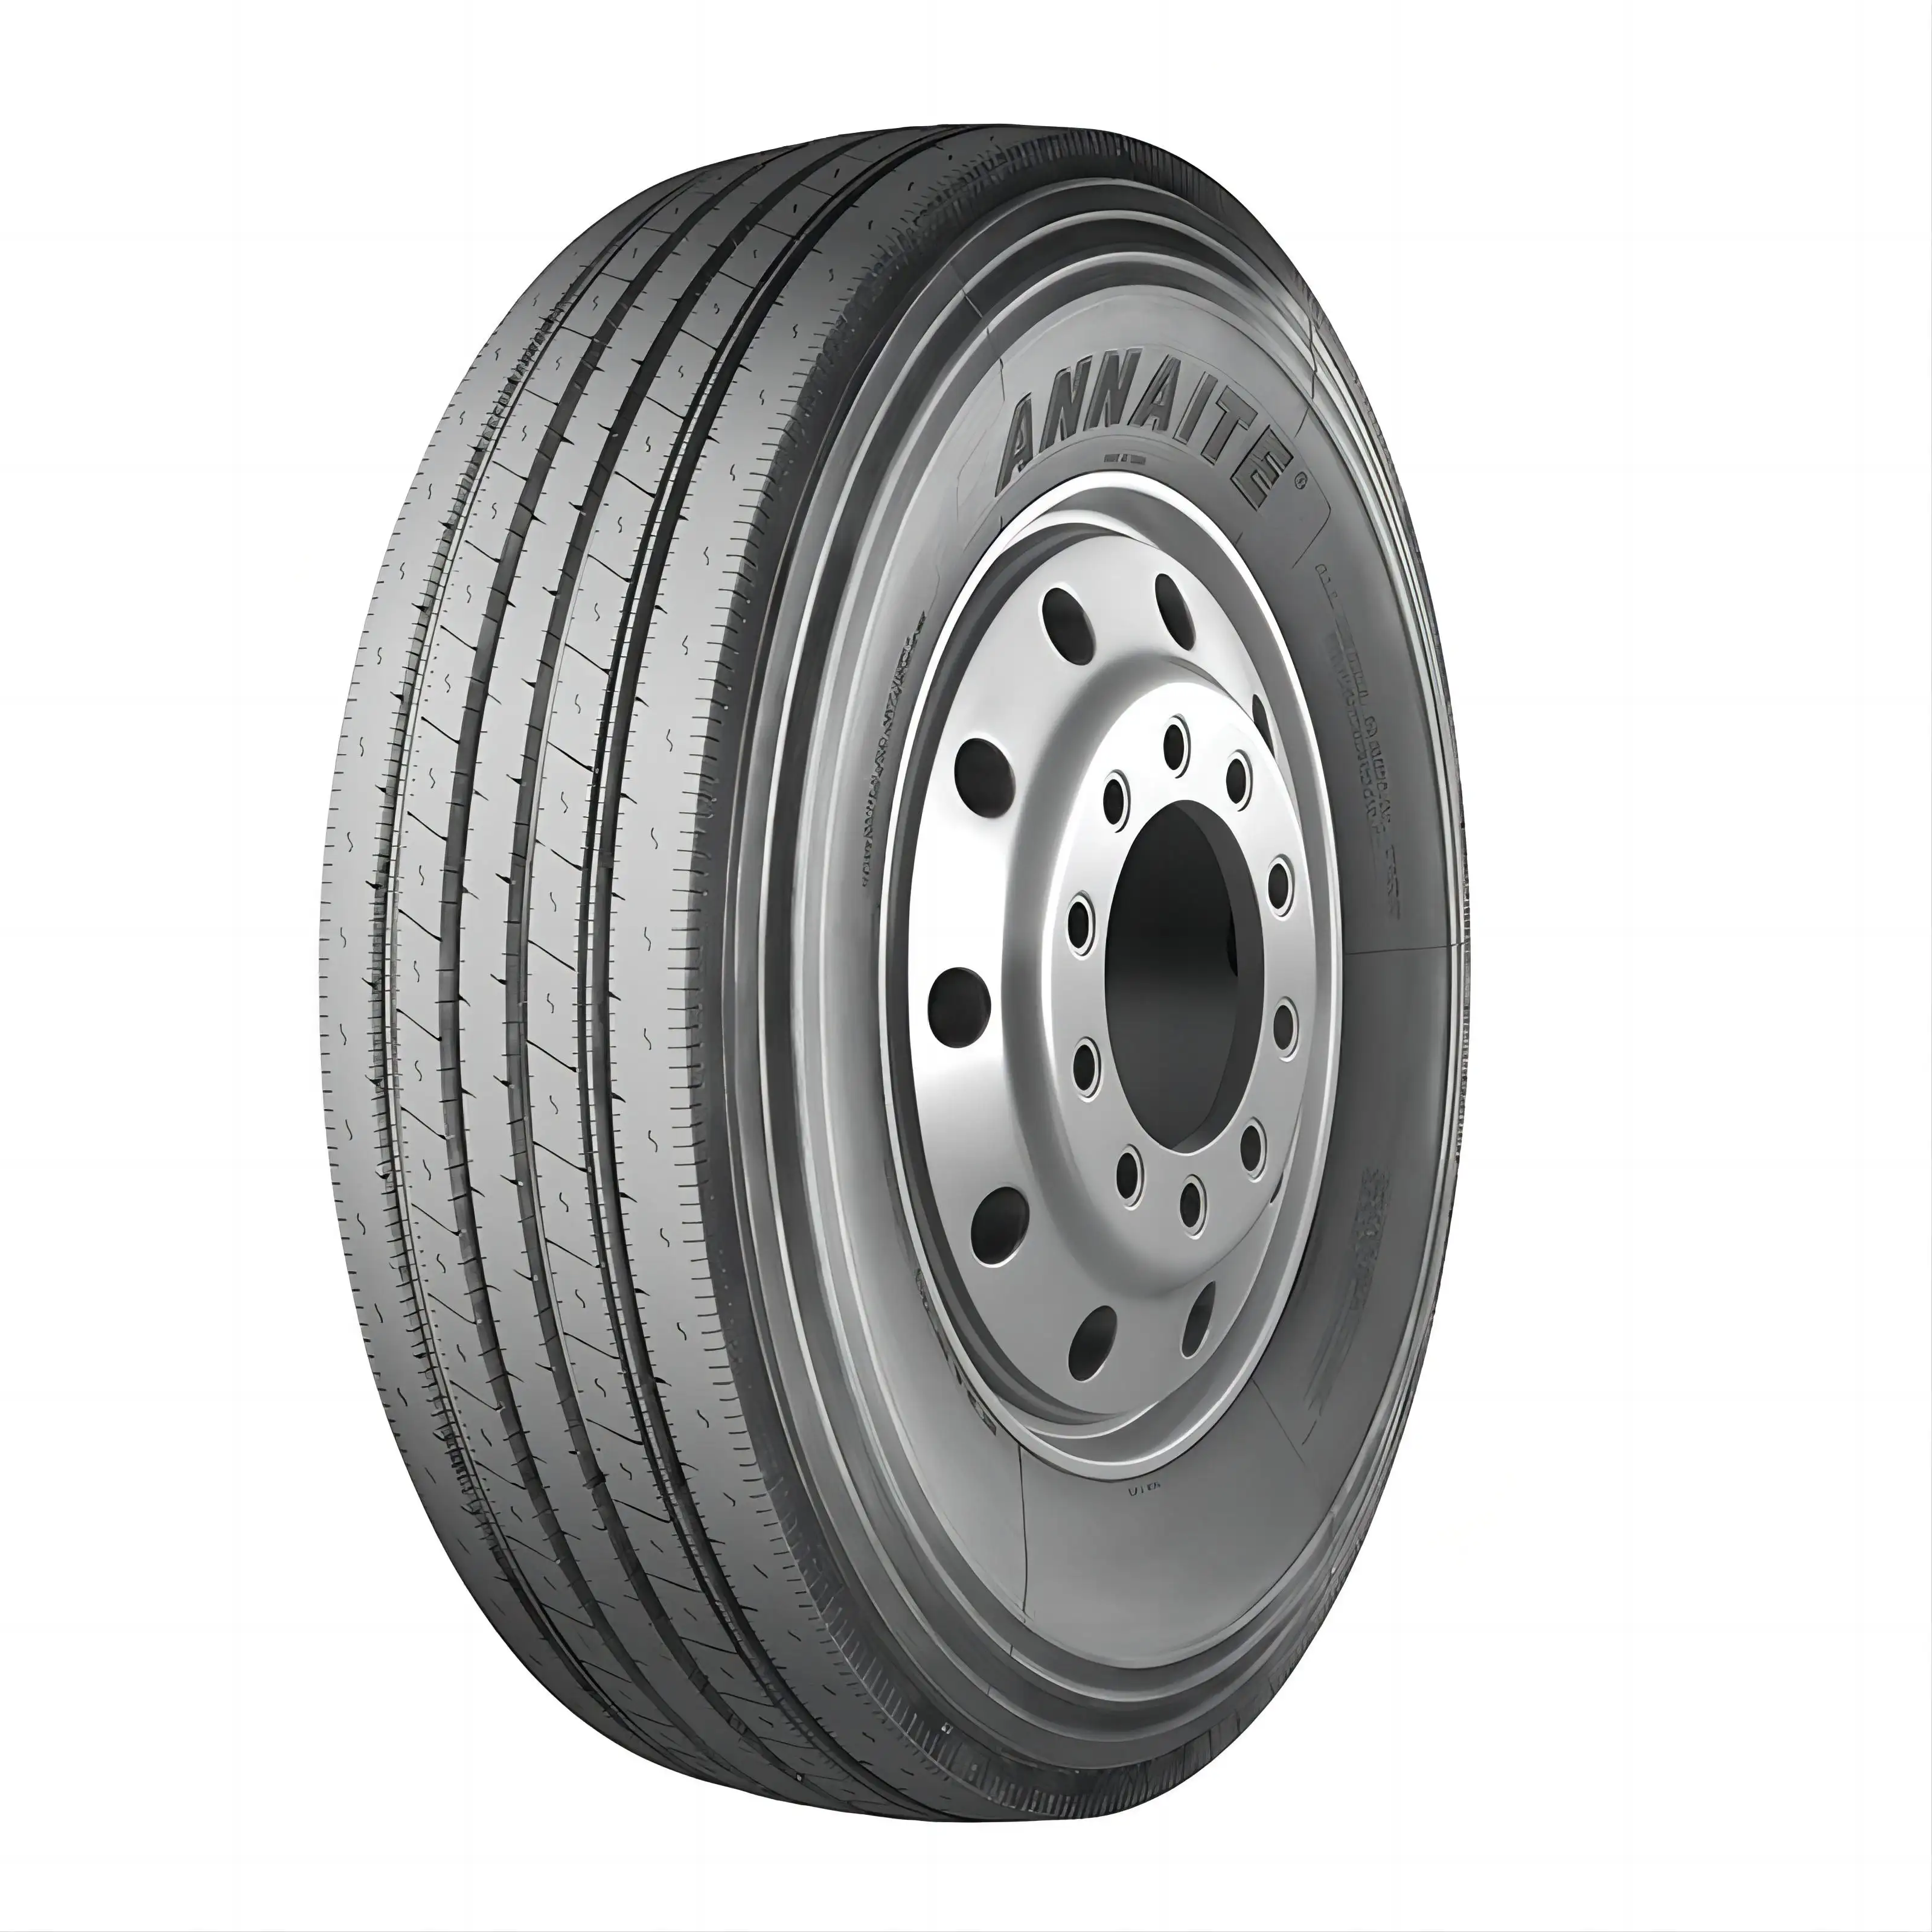 Topping Tubeless Commercial Wheels Reifen 11 r22.5 11 r24.5 12 r22.5 315/80 r22.5 295 75 22.5 Radial-LKW-Reifen 315/80 r22.5 Reifen